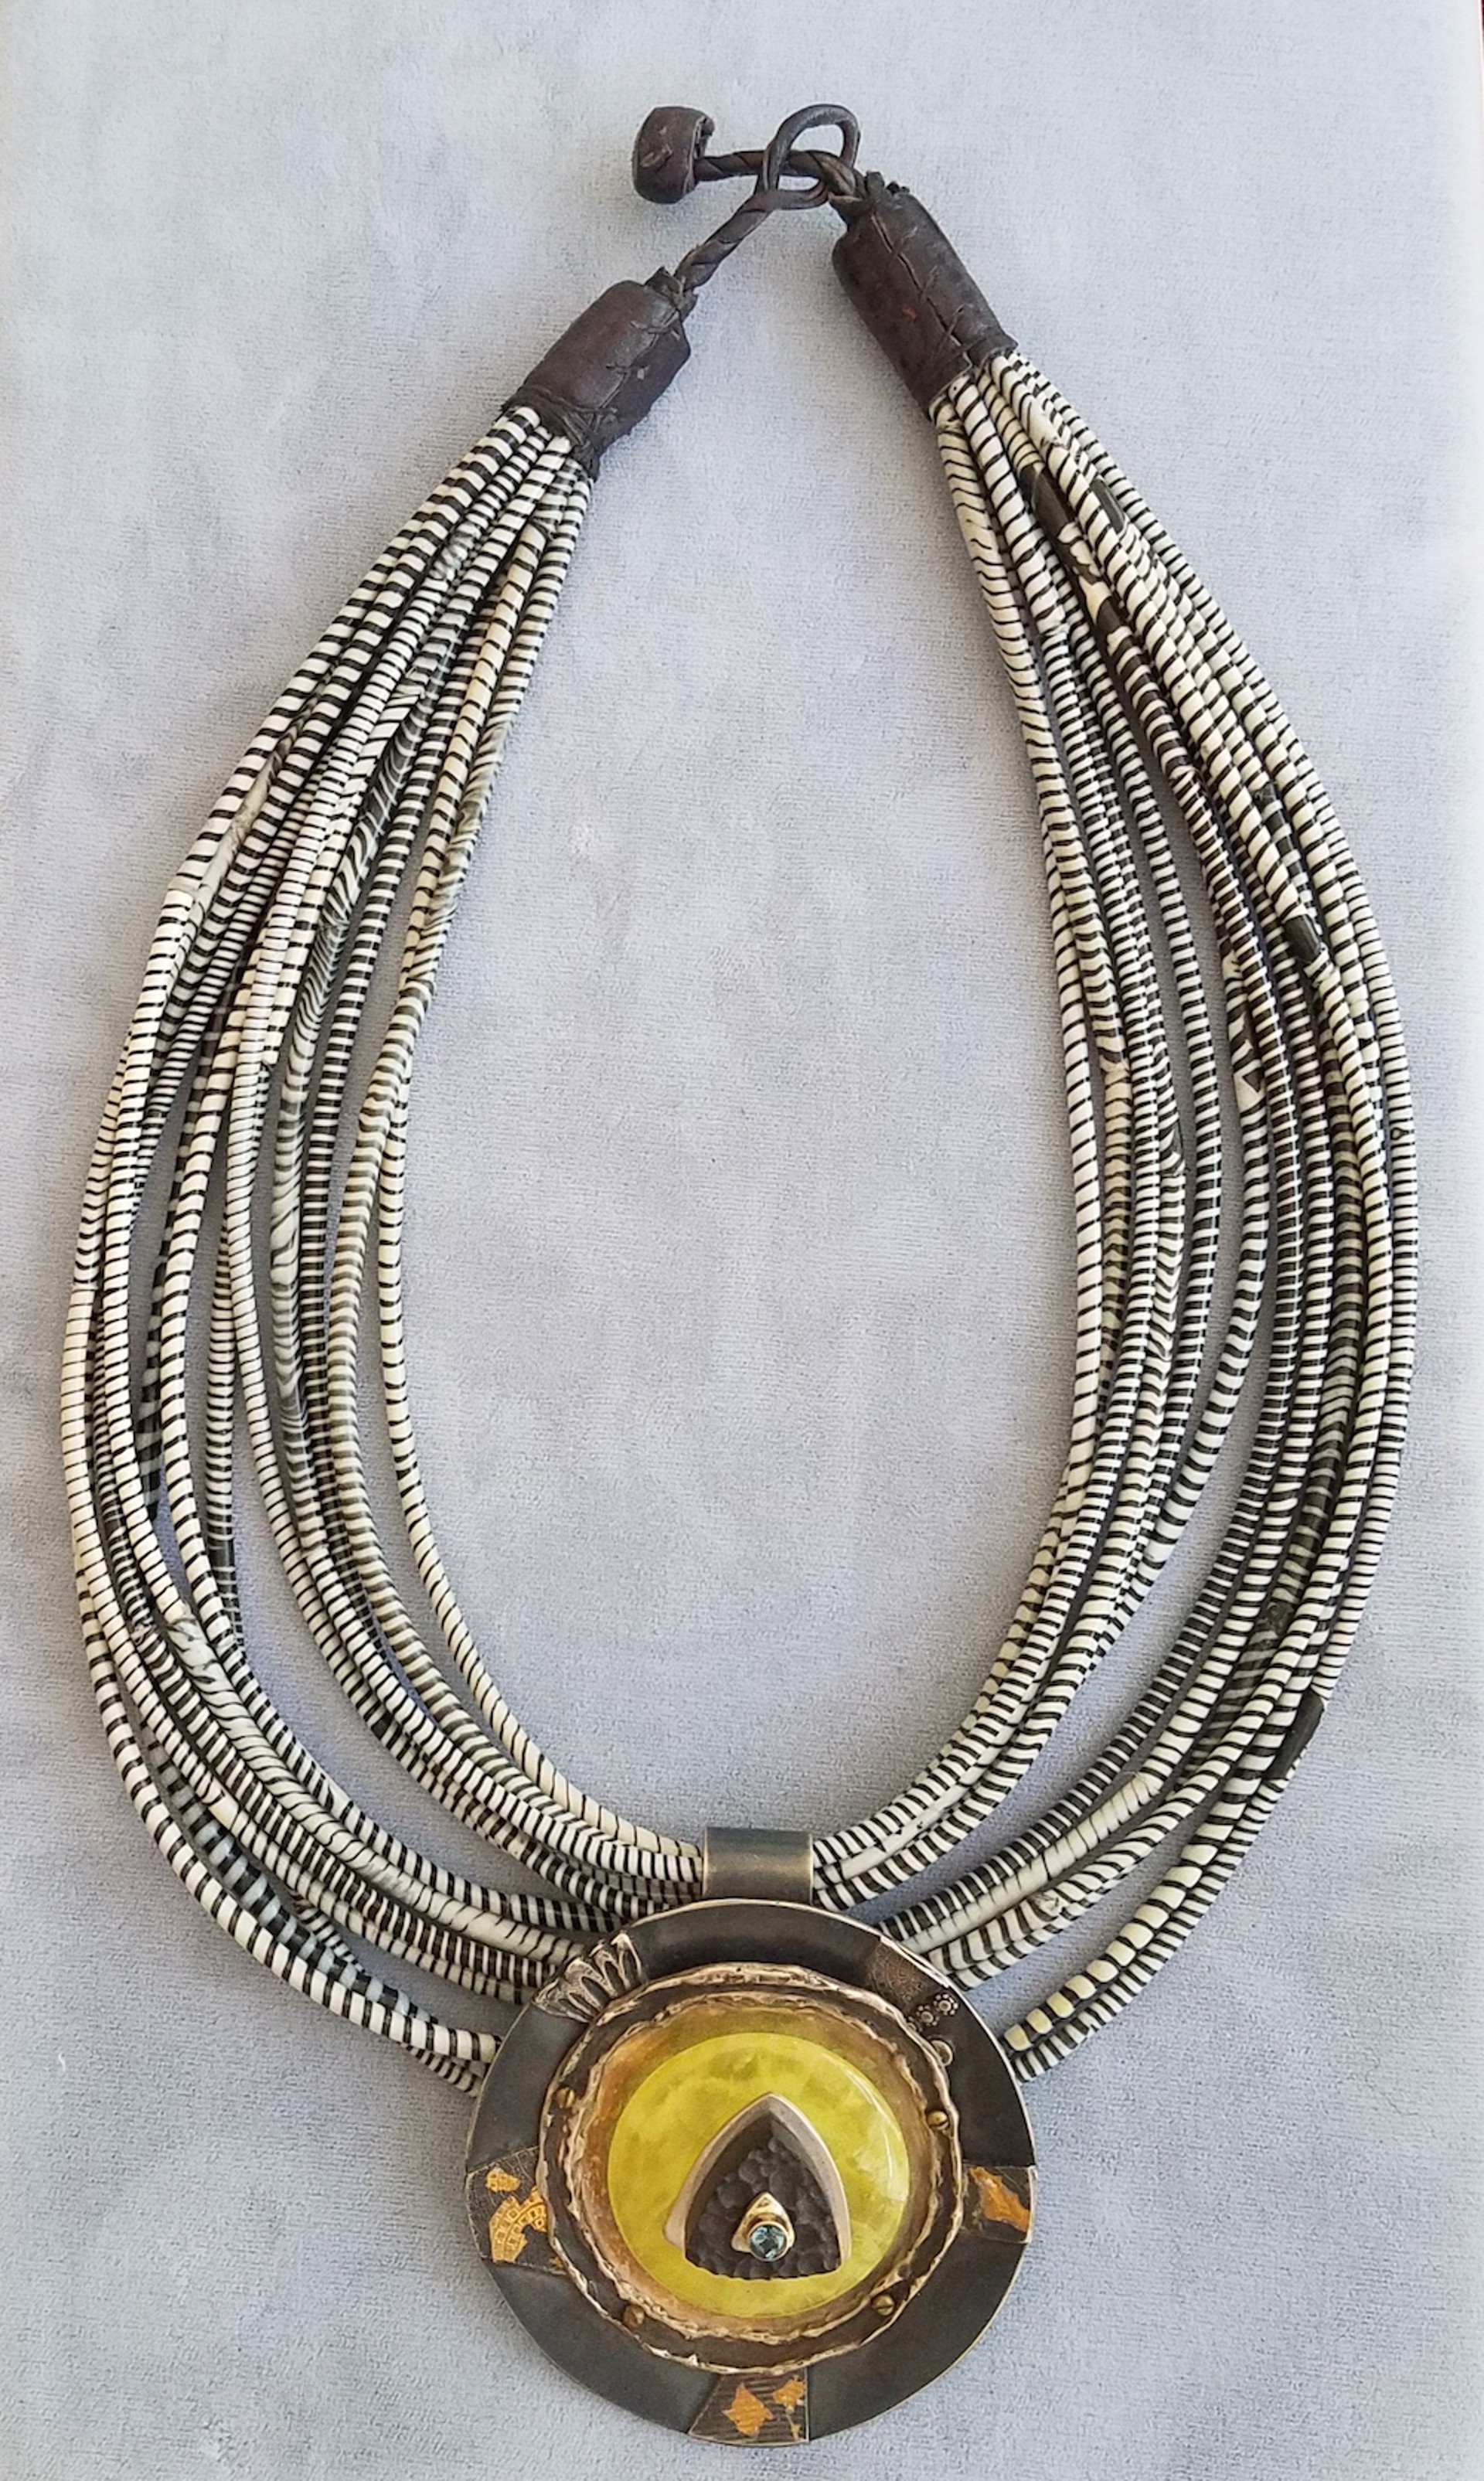 Necklace - Lemon Quartz,Tecktite,Aquamarine,Sterling Silver & 24K Gold #2528 by Doris King